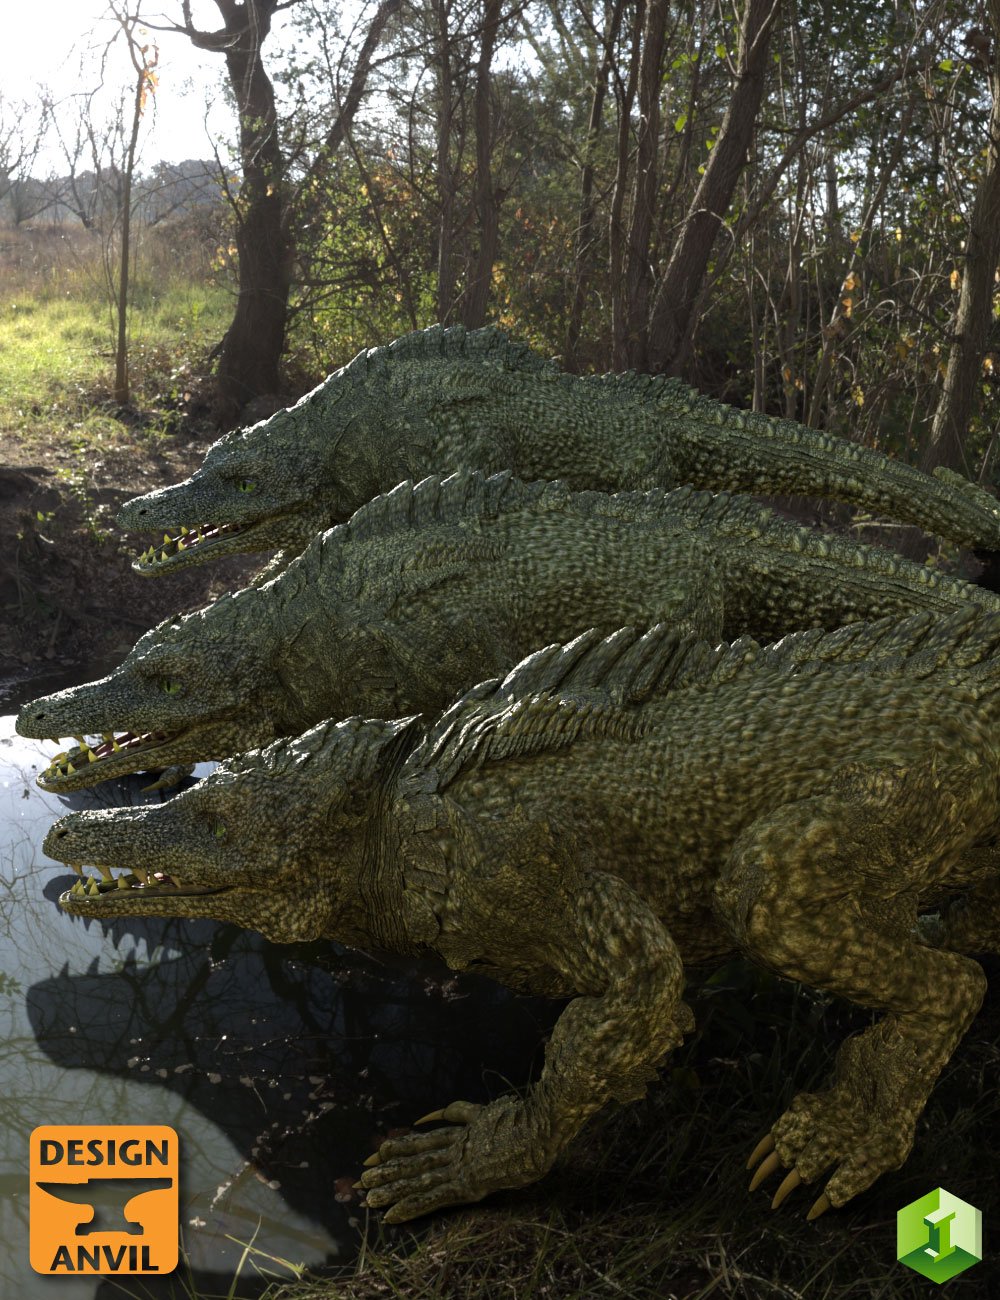 DA Crocobeast HD for Daz Dragon 3 by: Design Anvil, 3D Models by Daz 3D